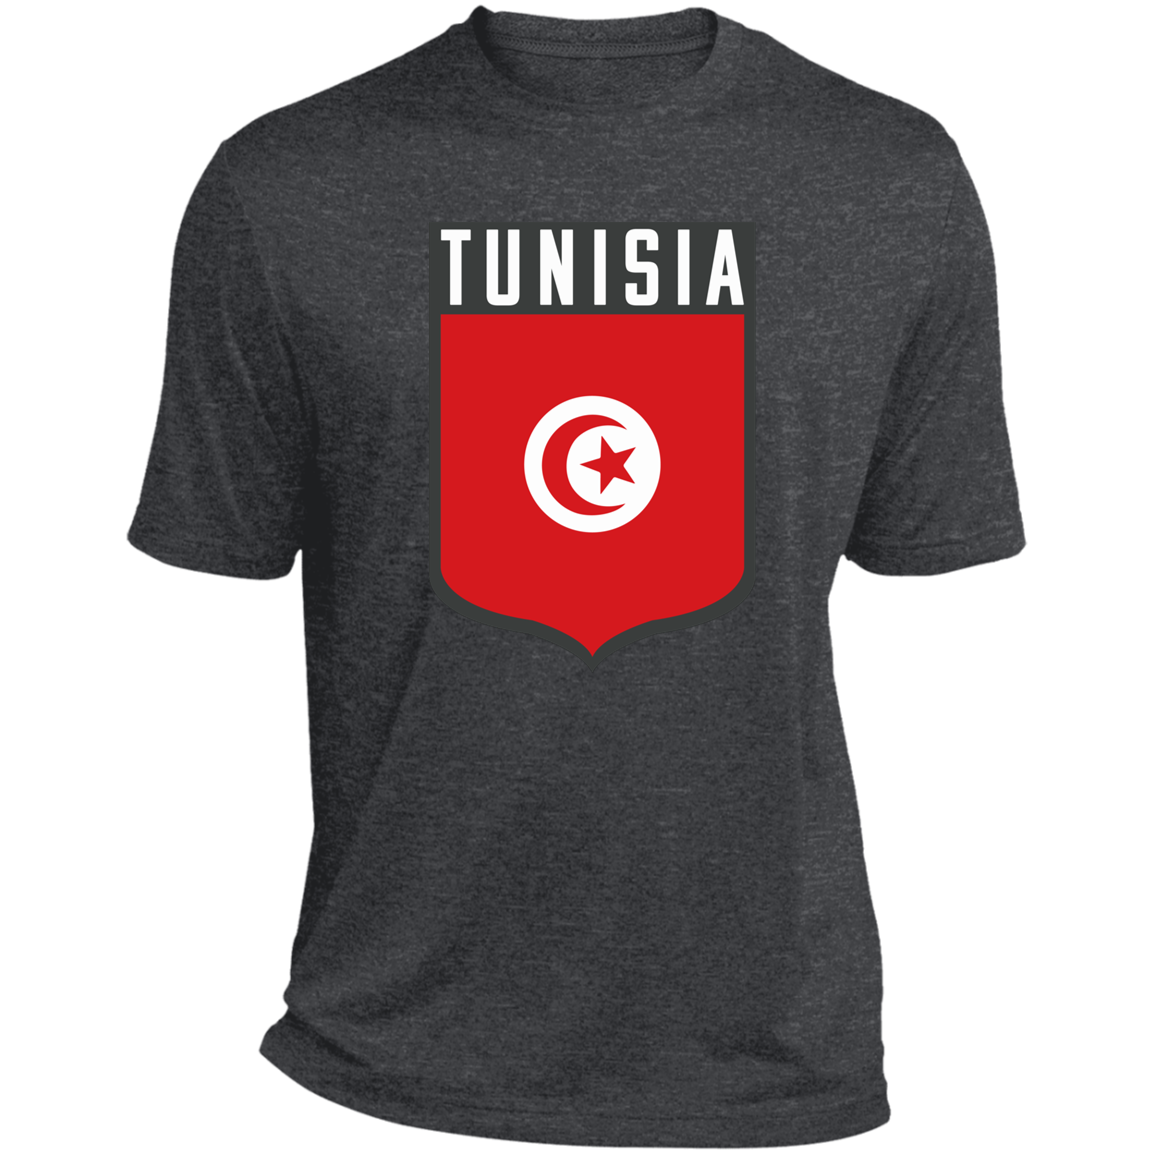 Tunisia Football Team Emblem Men's Sports T-Shirt